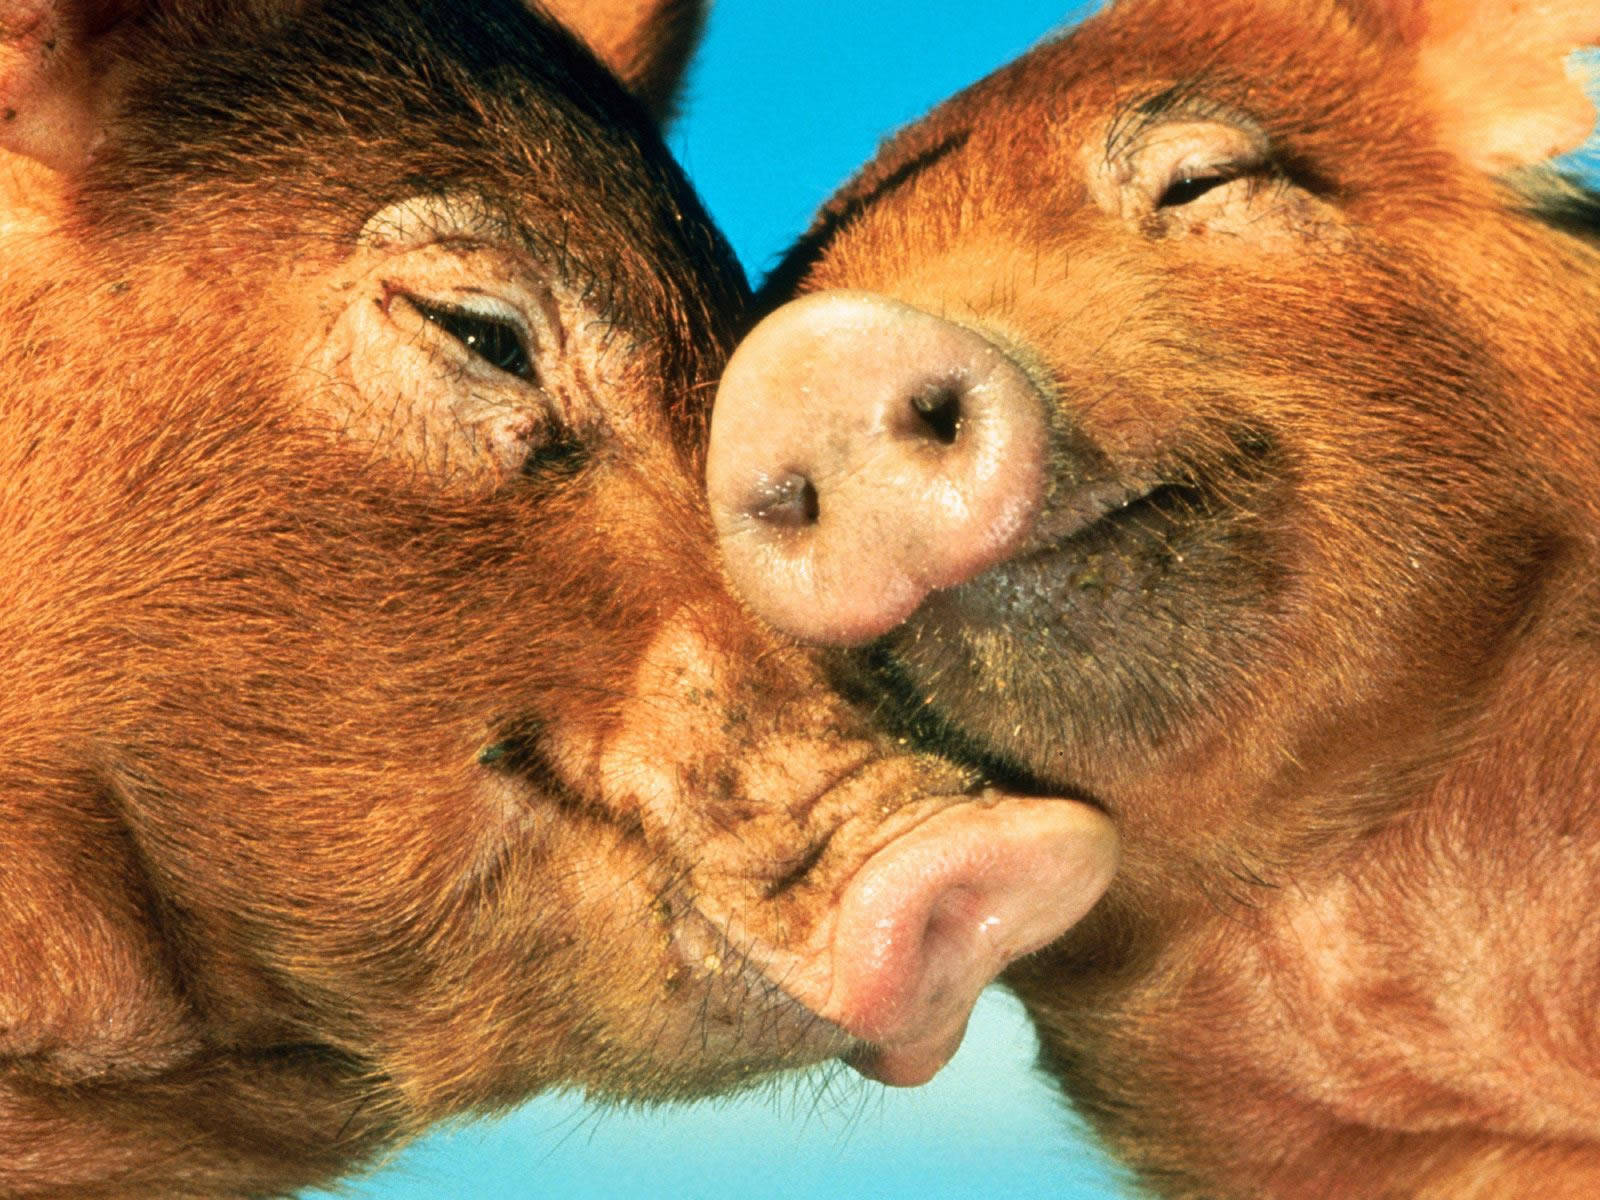 Farm Animal Reddish-Brown Duroc Pigs Wallpaper